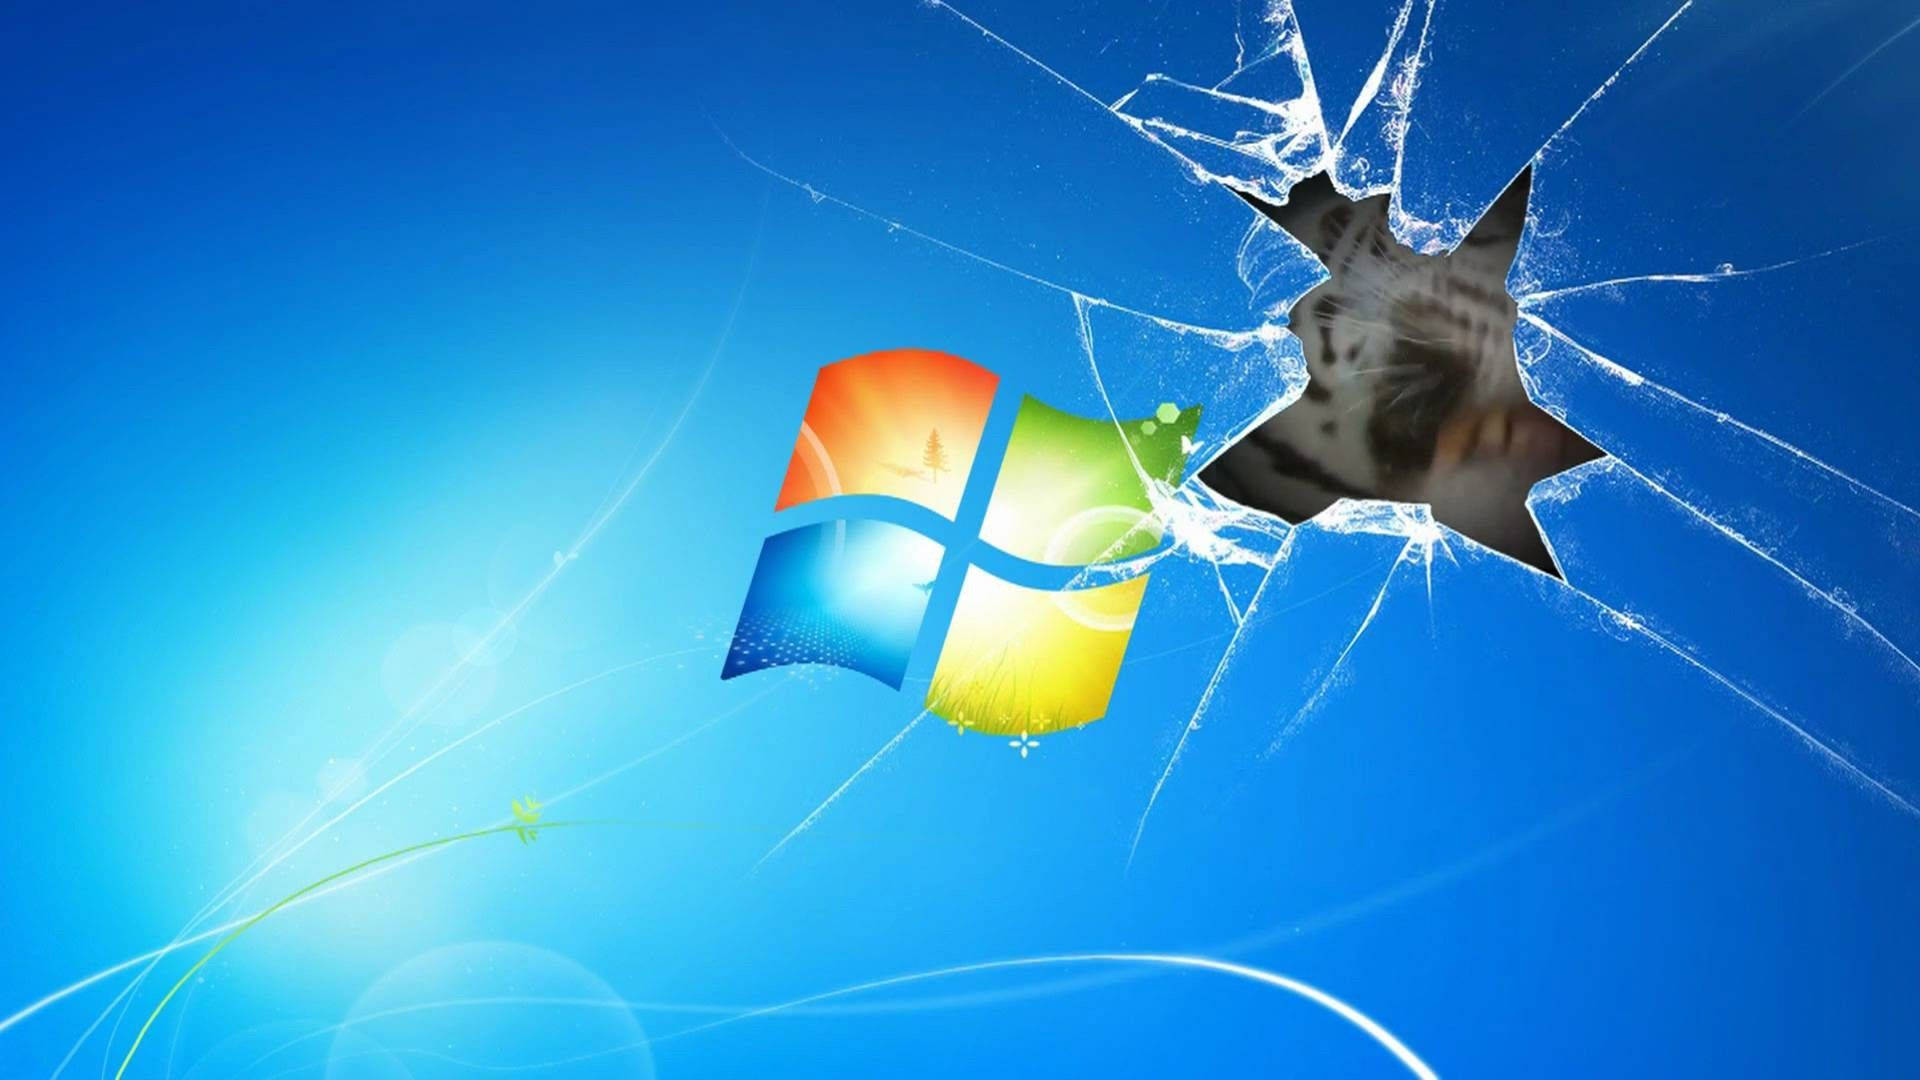 Windows 7 Animated Hd Wallpaper